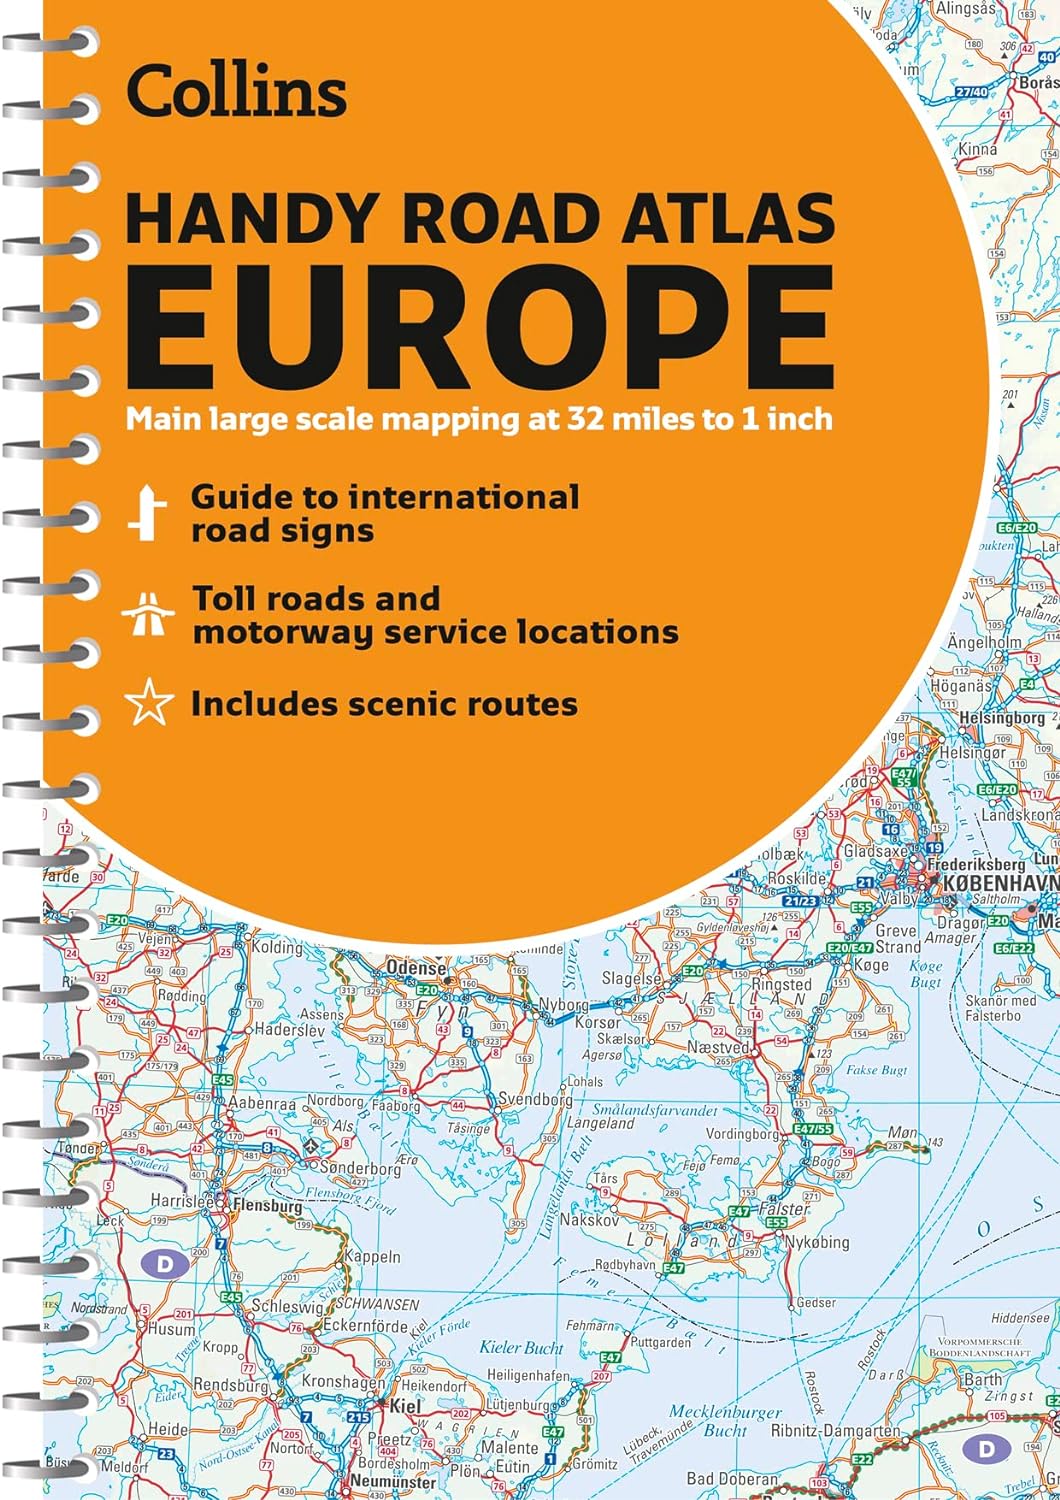 Europe Handy Road Atlas by Collins (2019)